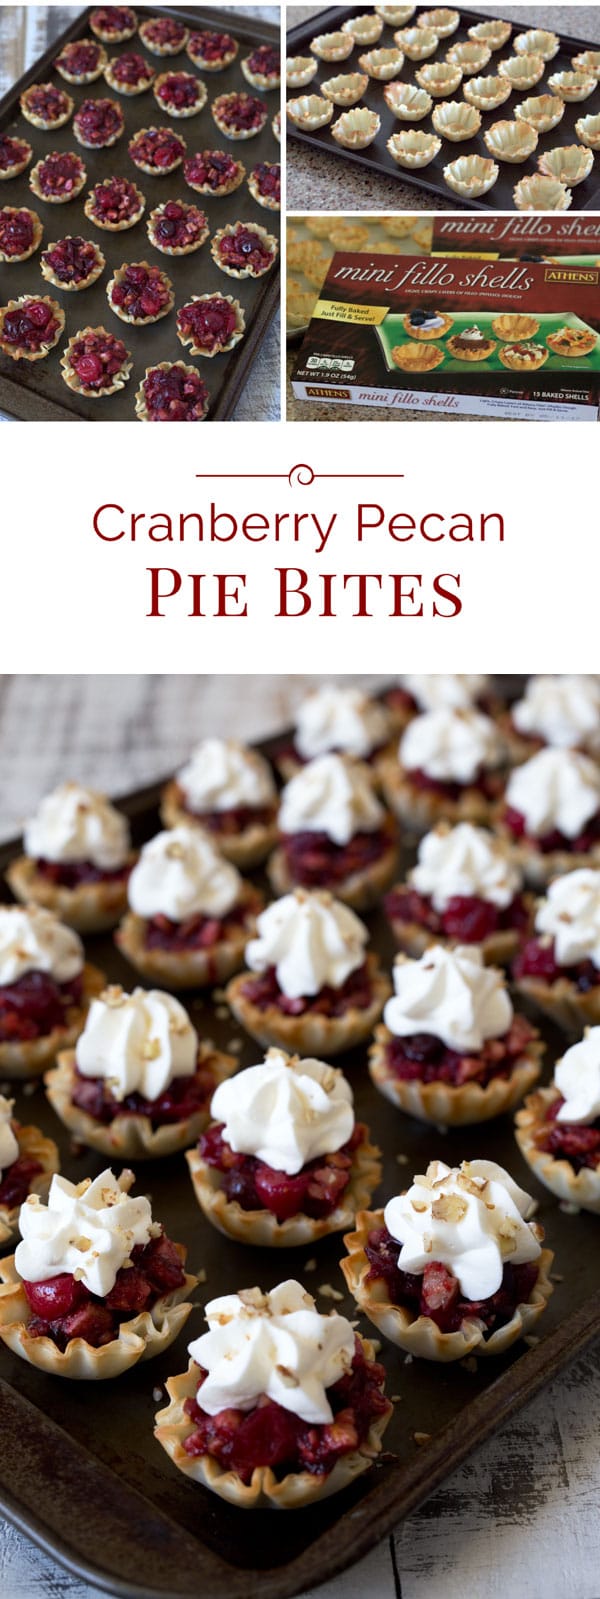 Cranberry-Pecan-Pie-Bites-Collage-2-Barbara-Bakes